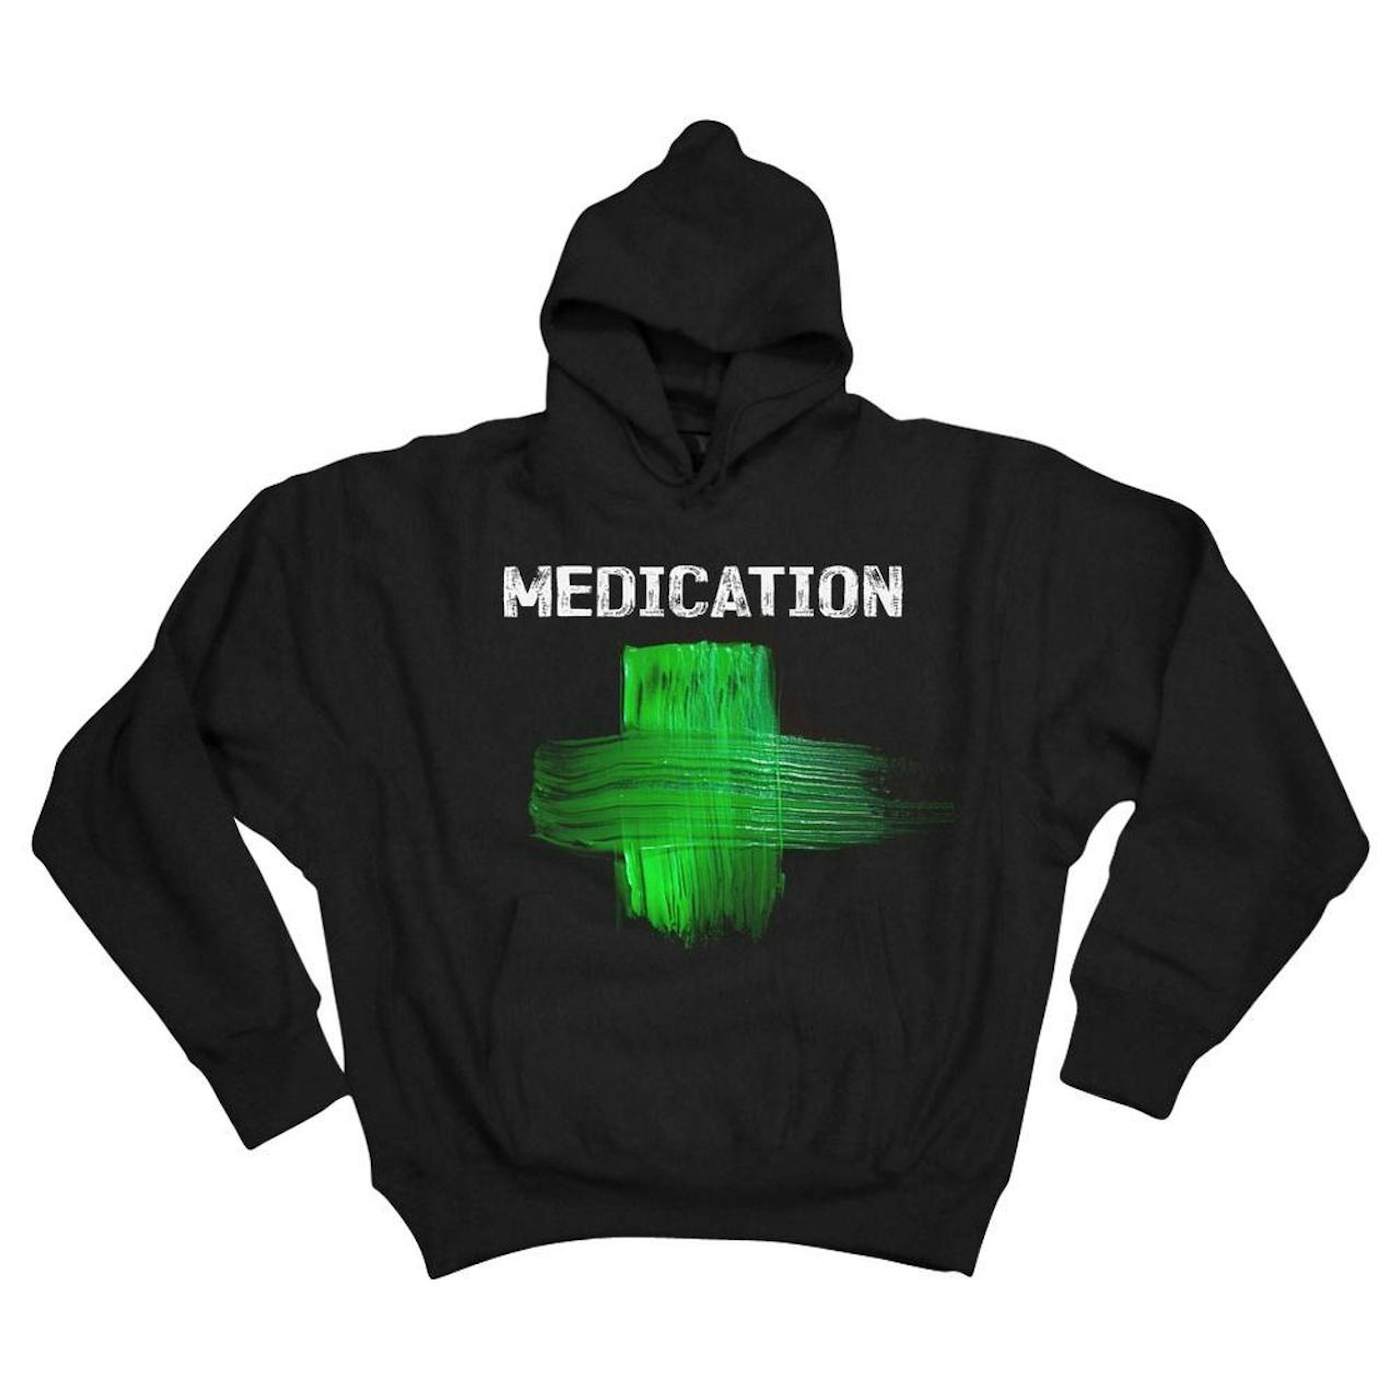 Damian Marley "Medication" Pullover Hoodie